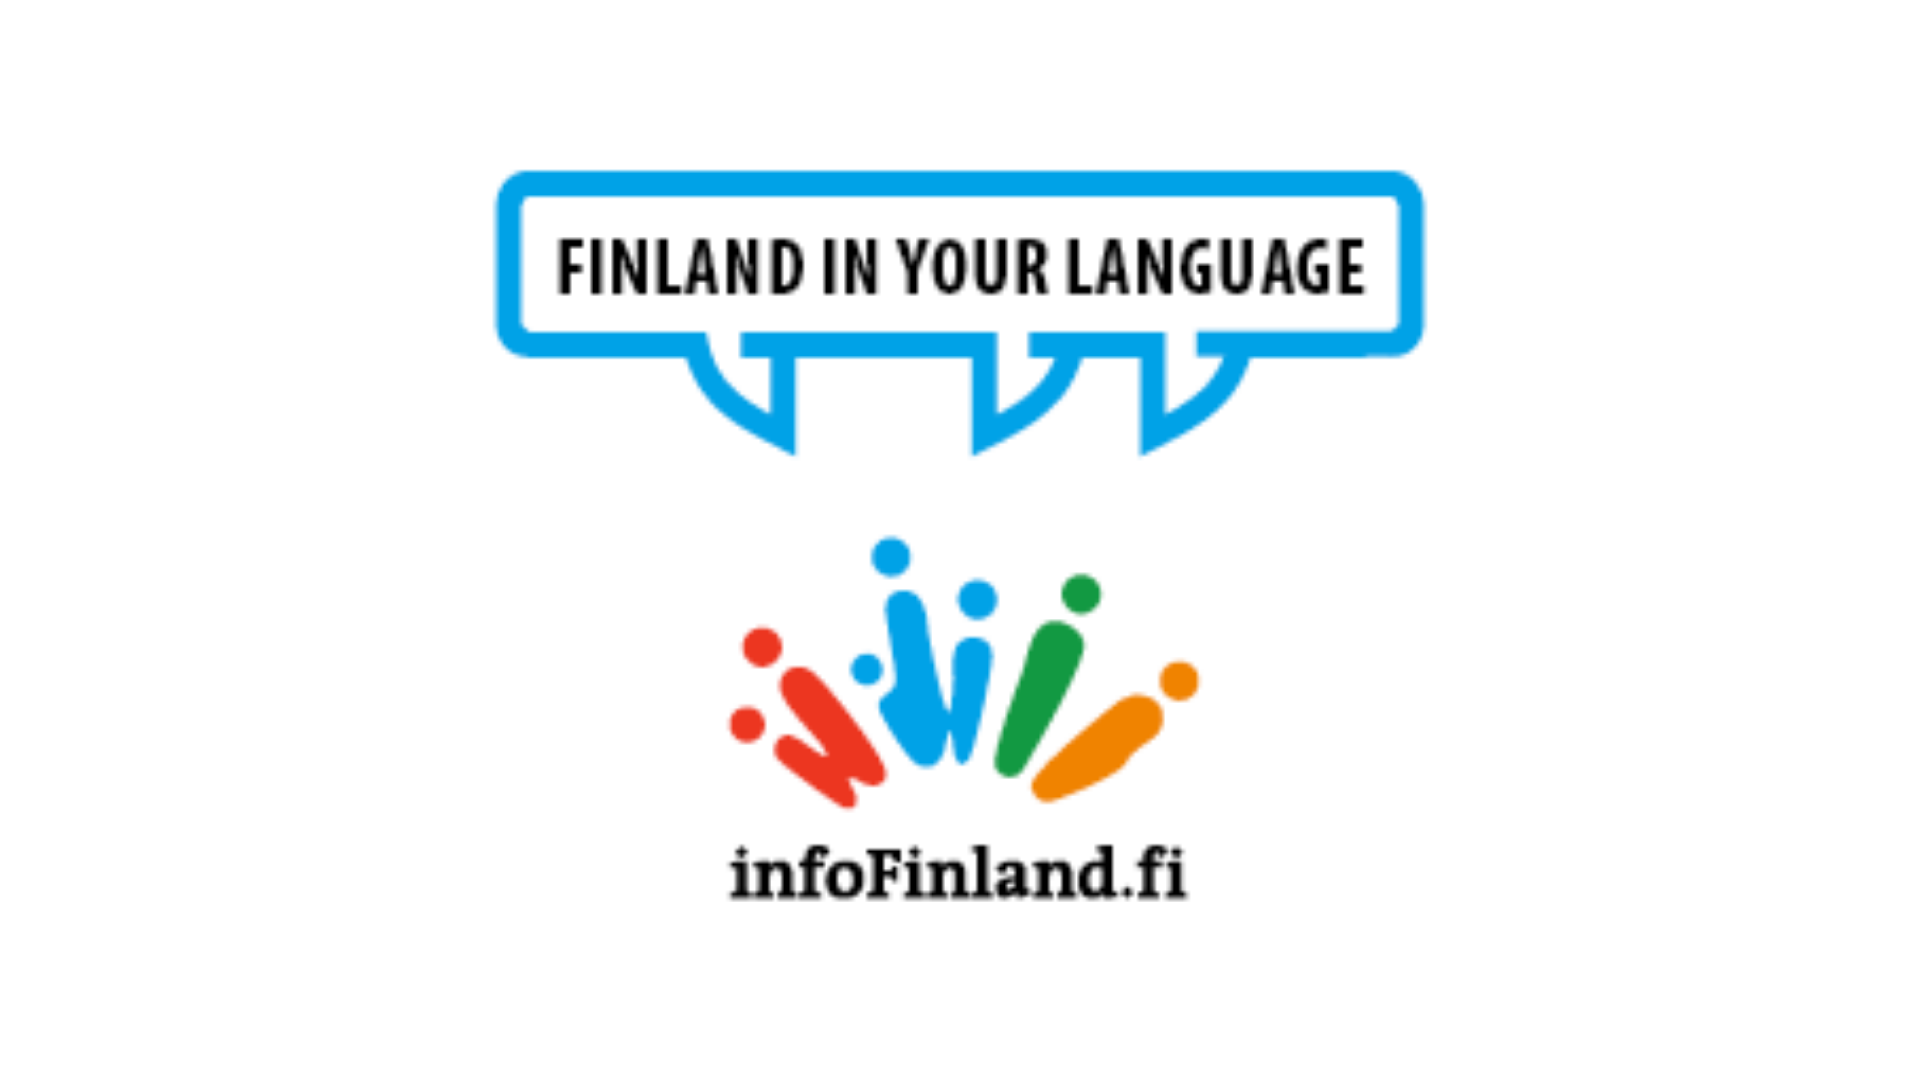  Infofinland.fi logo. 